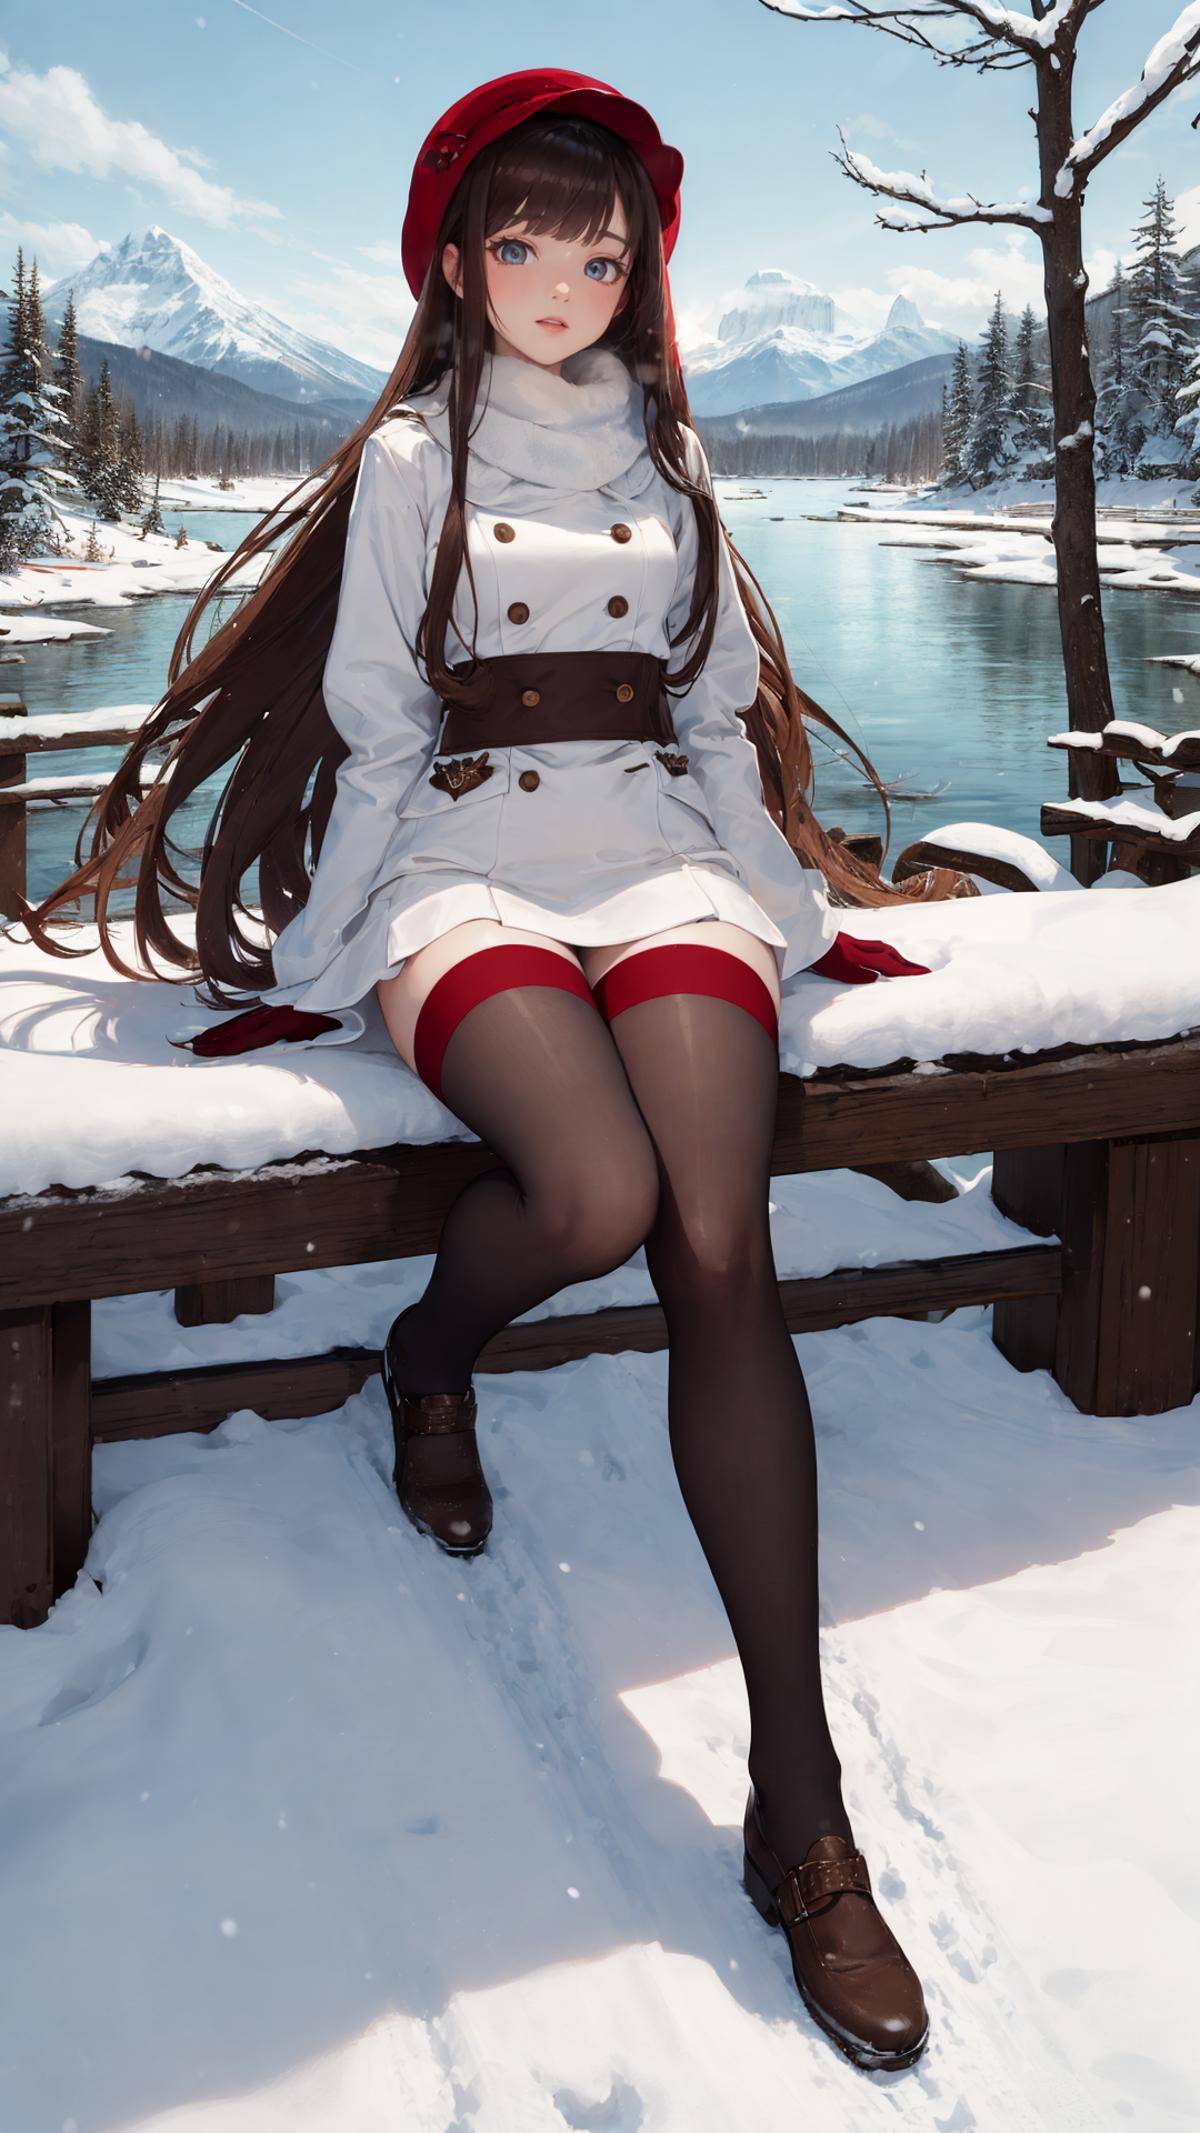 tutu's HiSilk (8D black red edge stocking stockings)/图图的嗨丝（8D黑色红边长筒袜丝袜） image by tututututuz